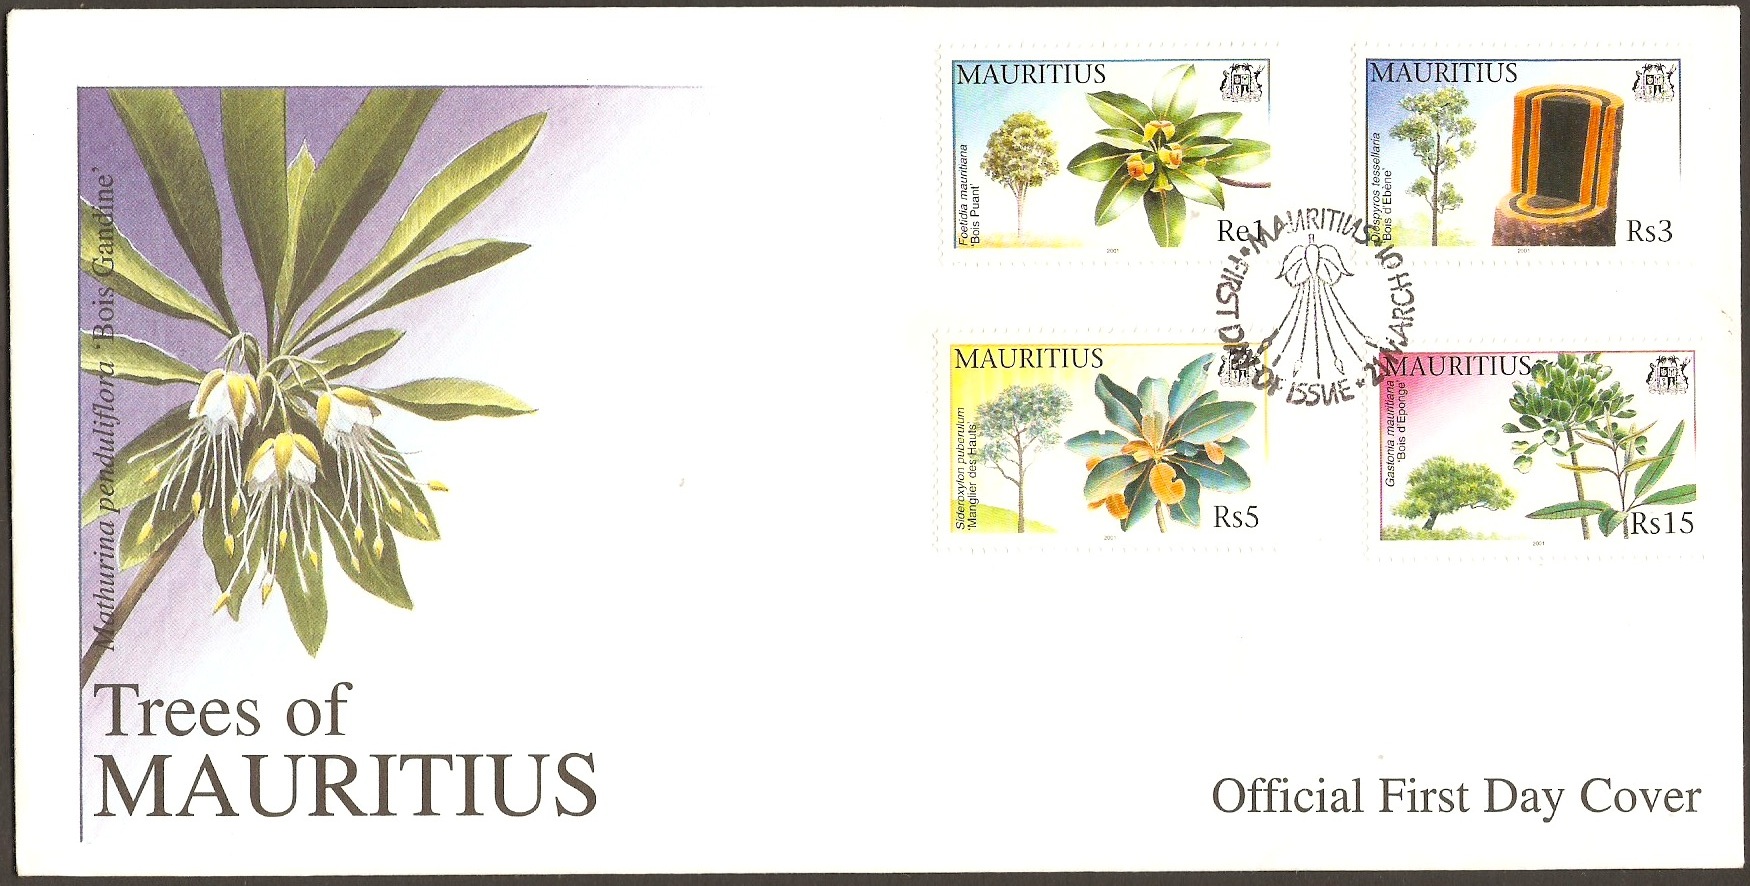 Mauritius Postal Ephemera